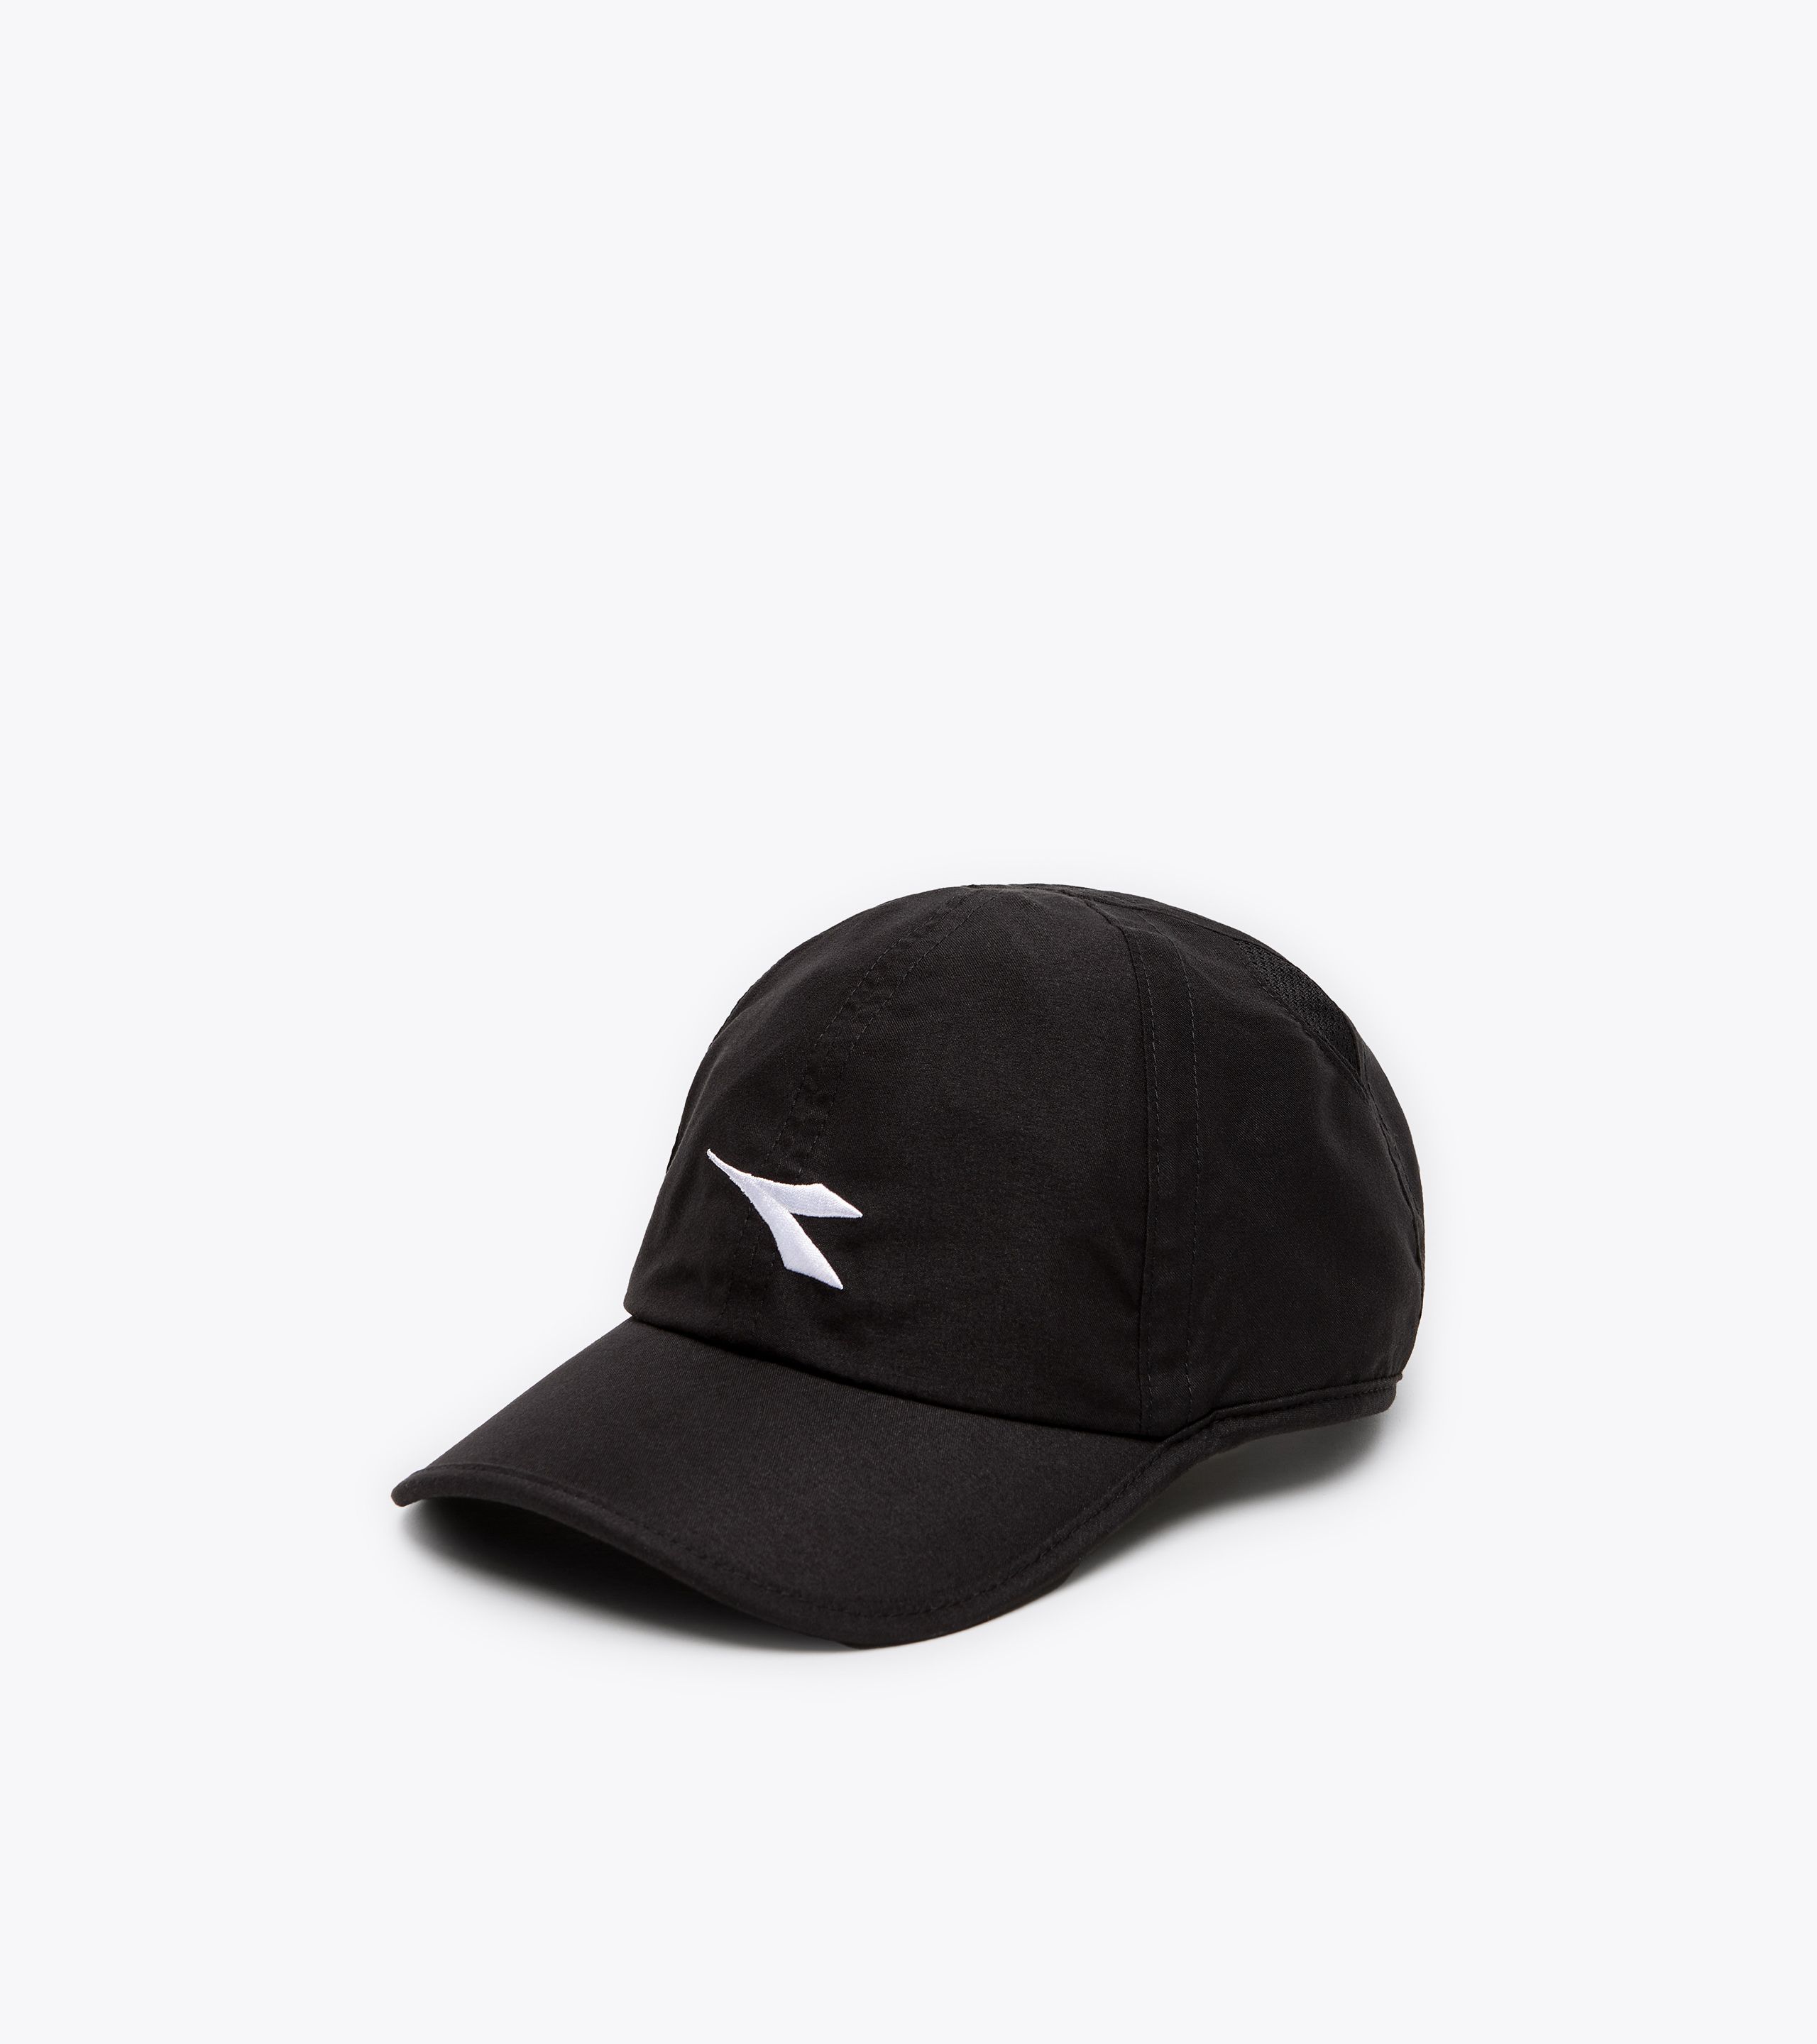 ADJUSTABLE CAP Tennis-style hat - Diadora Online Store